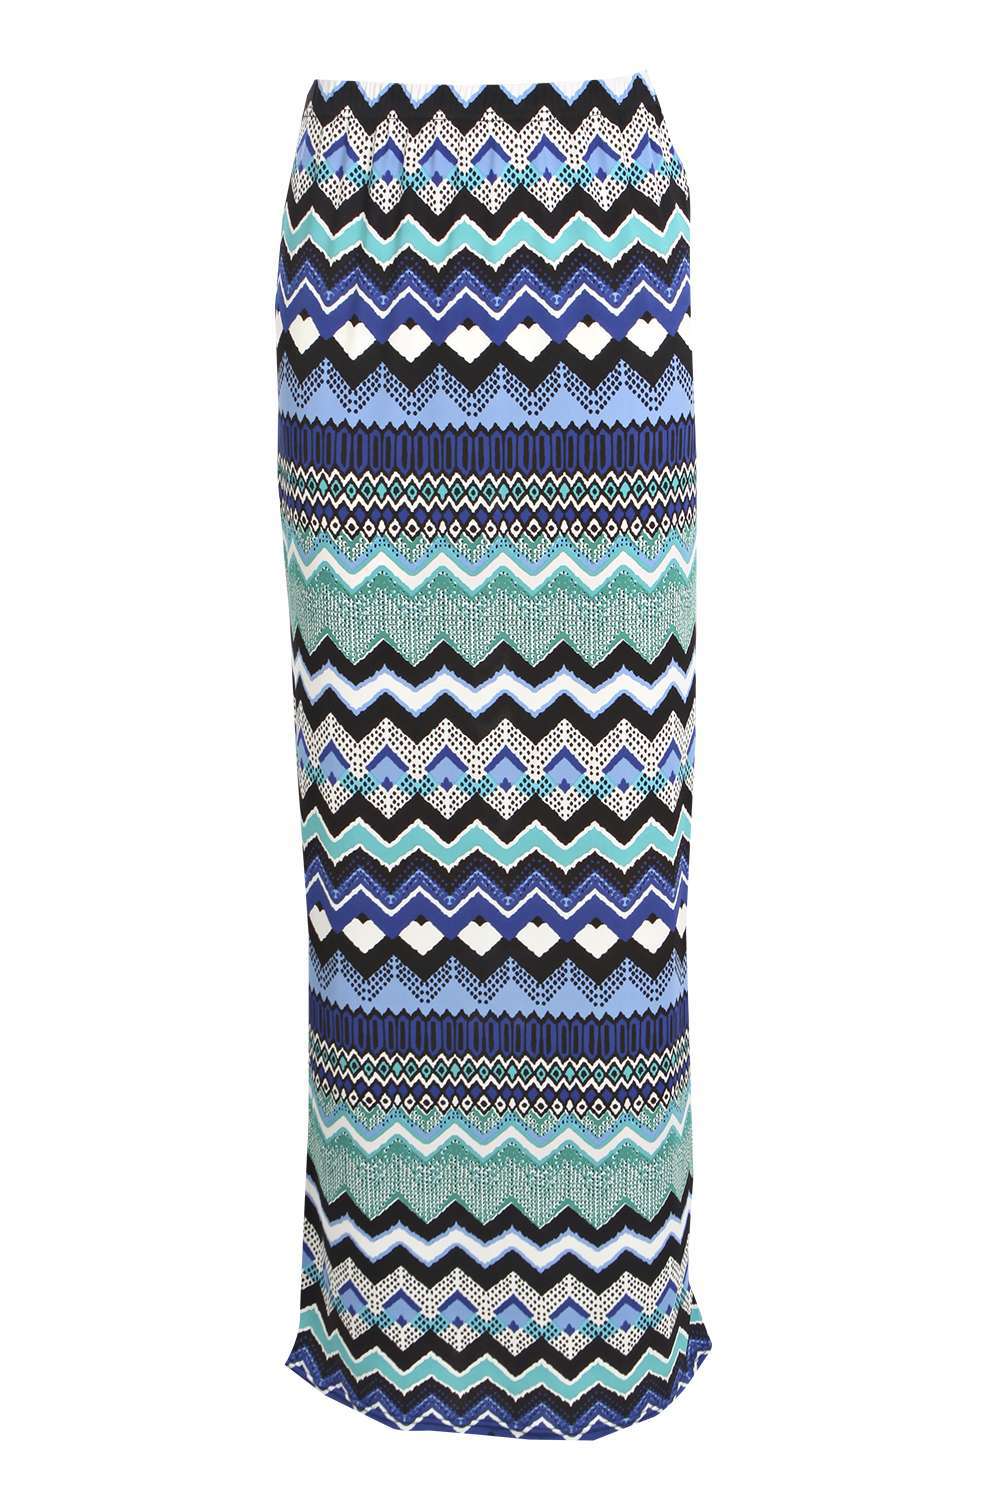 Fashion women Elegant blue Geometric print Long Pencil skirts vintage casual brand Fitness Sexy Party Plus Size